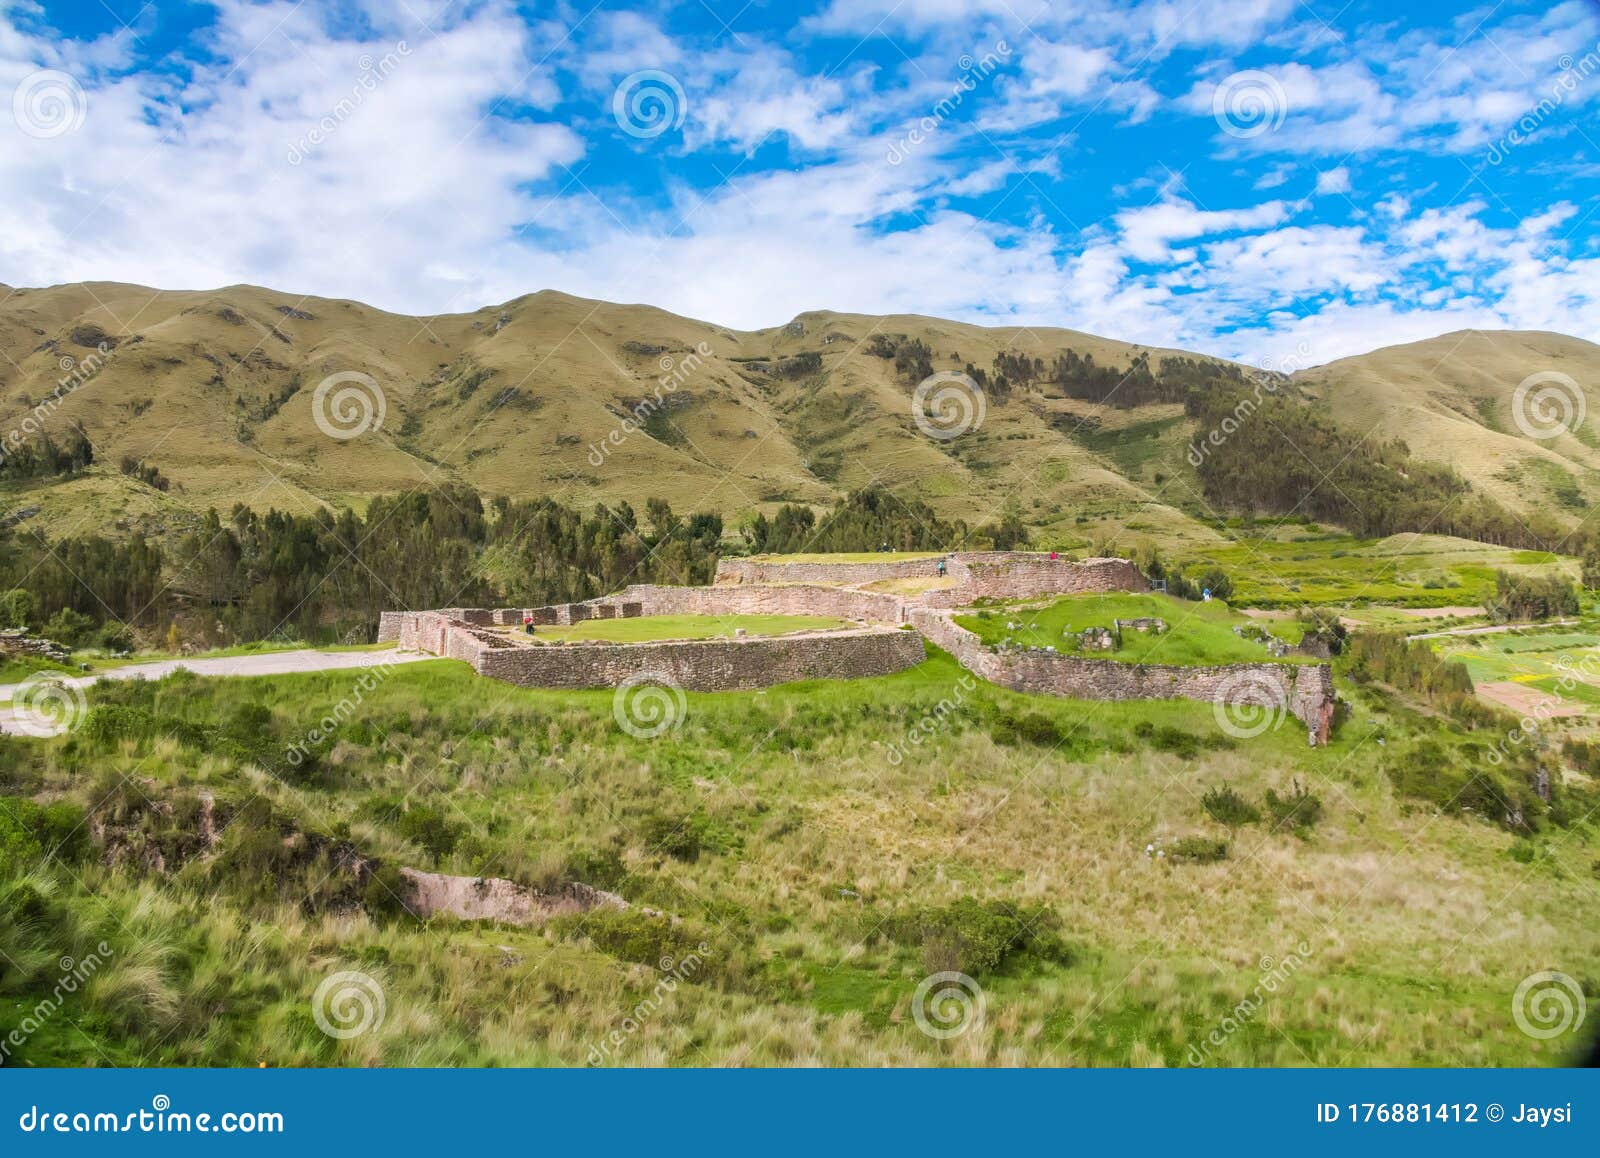 puca pucara, ruins of ancient inca fortress in cusco, peru